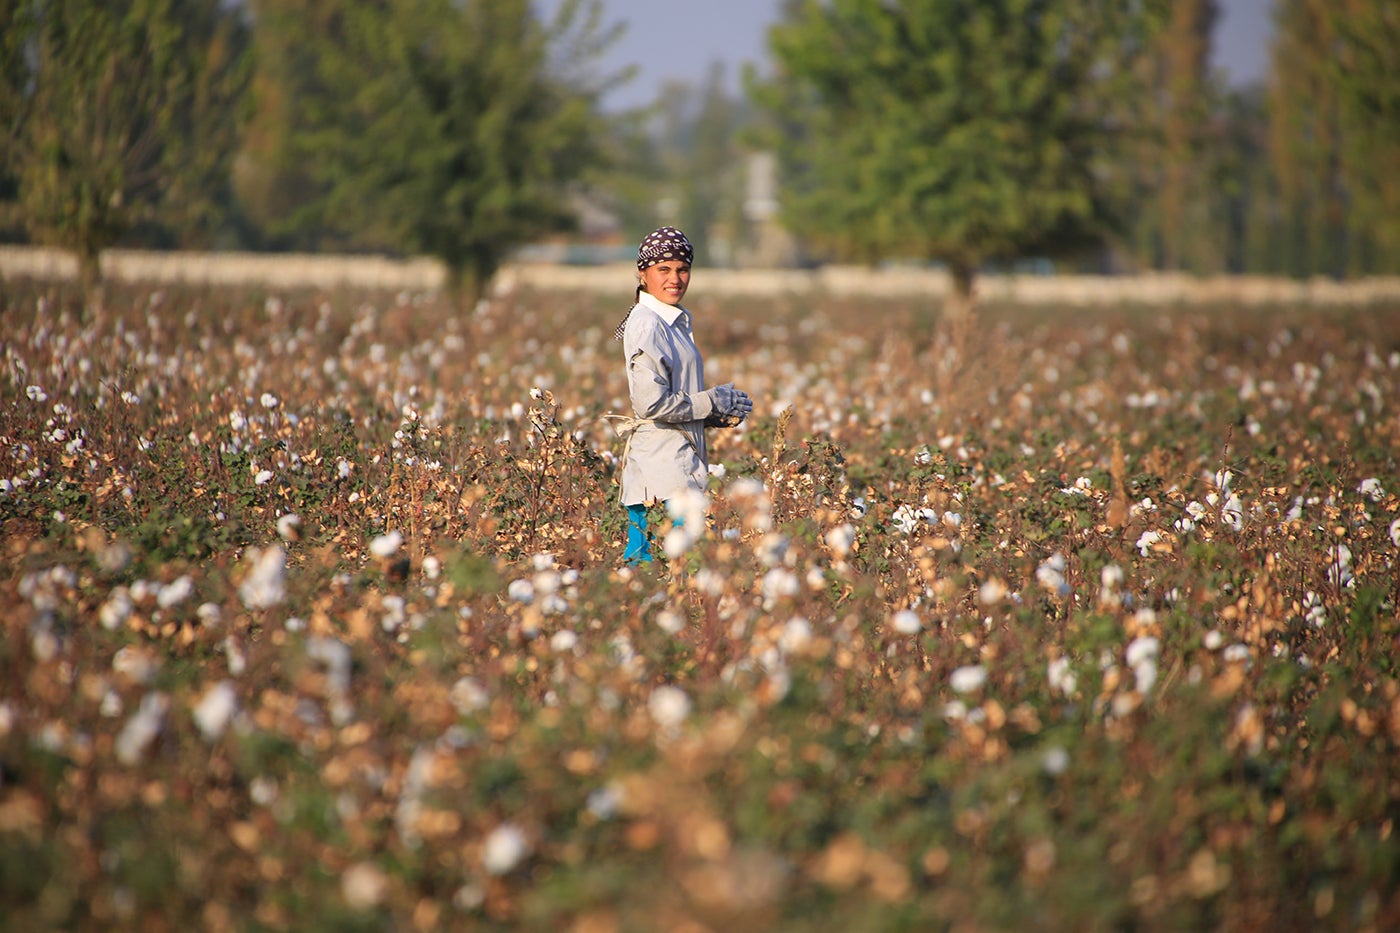 An Uzbekistan cotton grower works in a cotton plantation outside Tashkent, on October 24, 2019. 